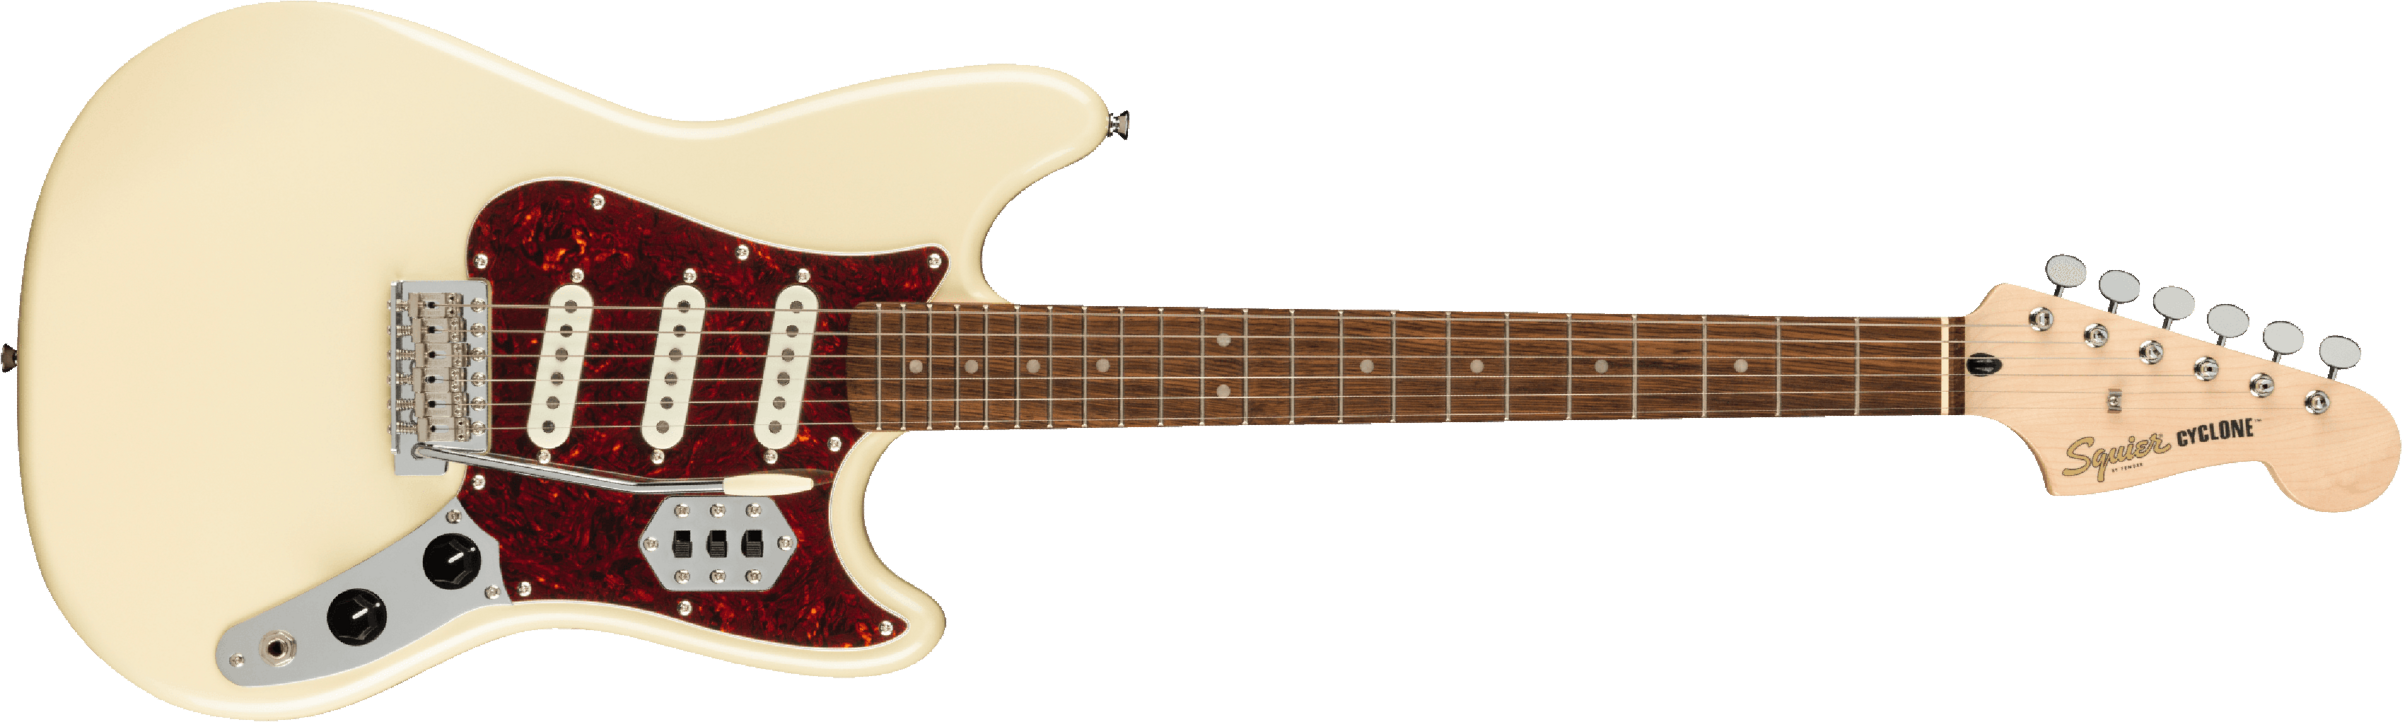 Squier Cyclone Paranormal 3s Trem Lau - Polar White - Retro rock electric guitar - Main picture